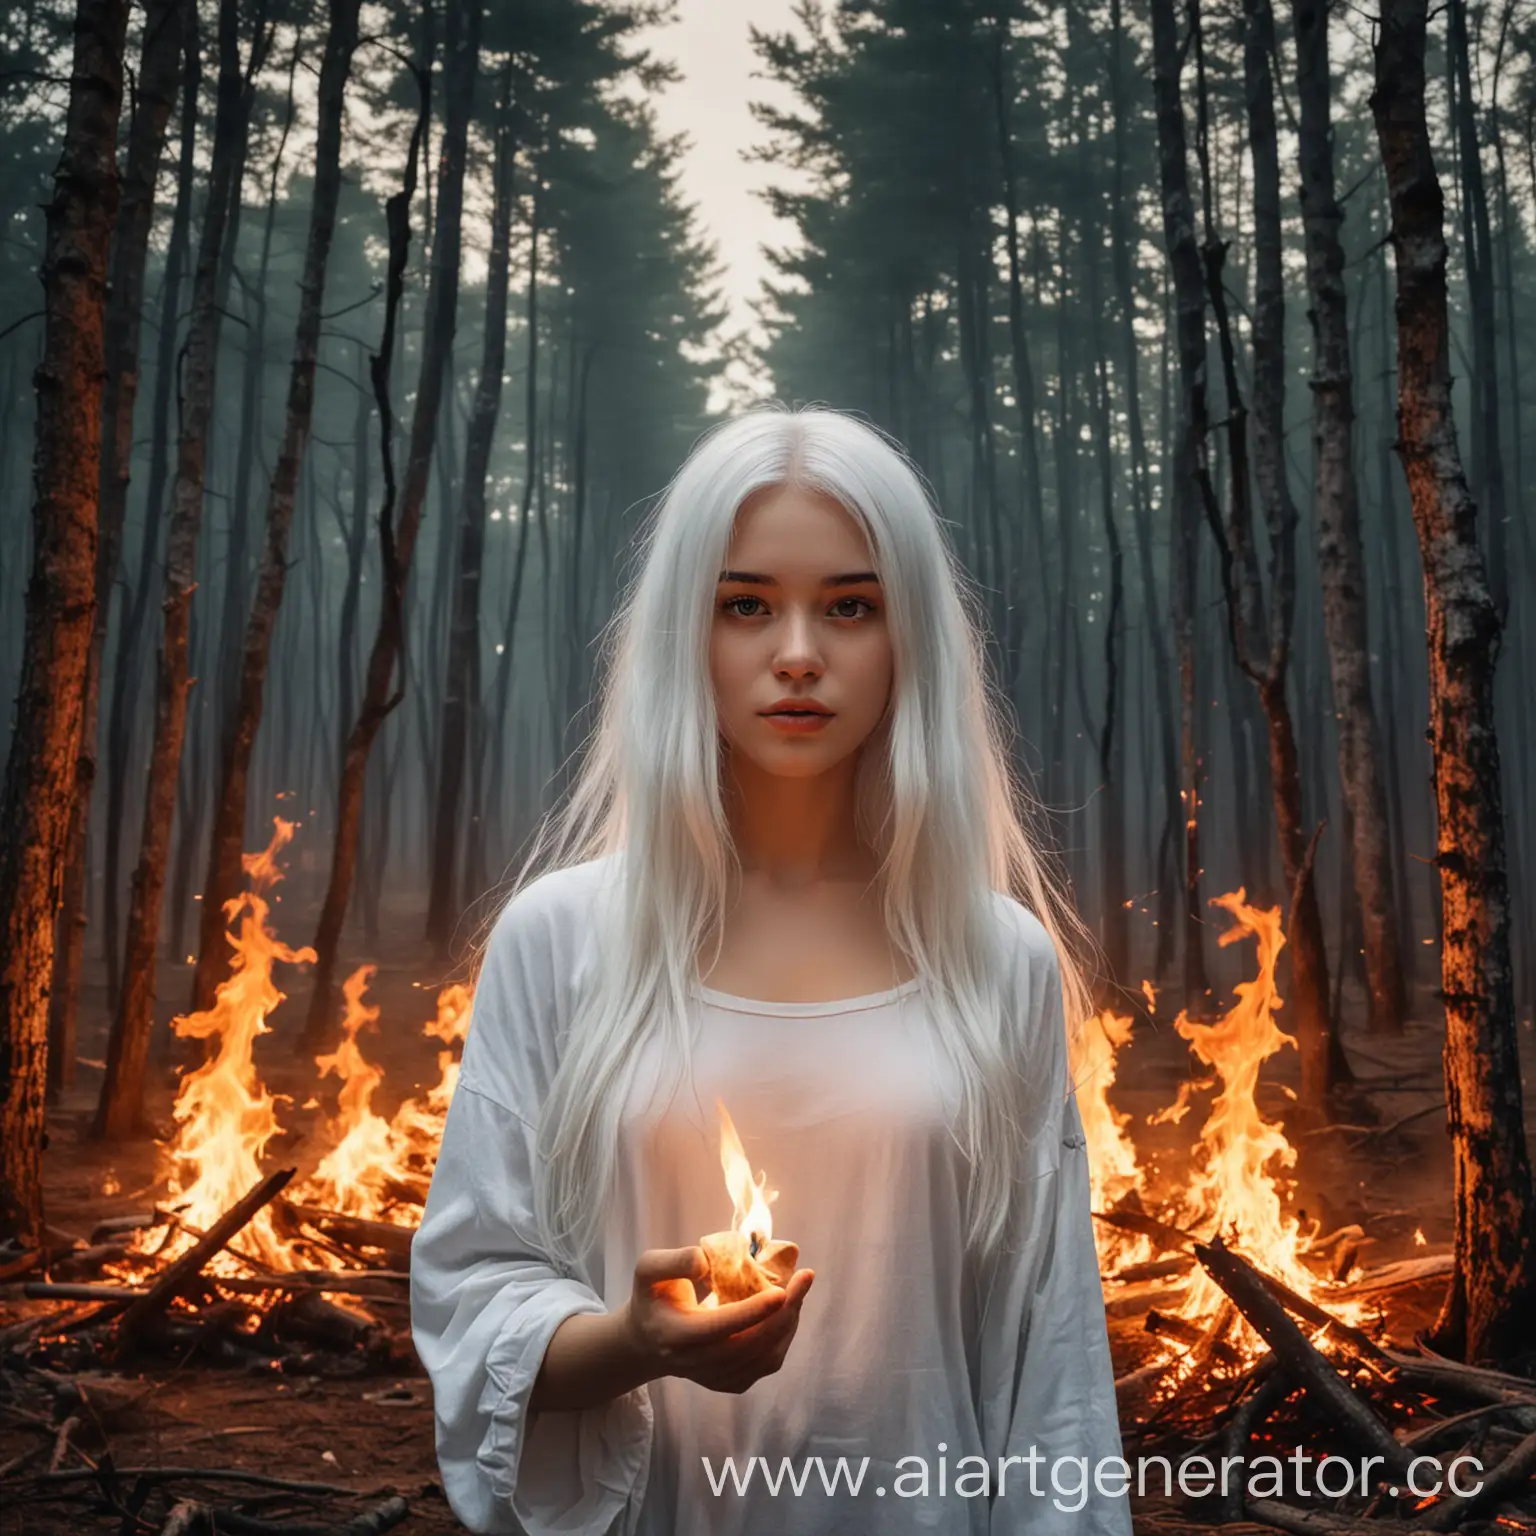 Girl-with-White-Hair-Holding-Lighter-in-Burning-Forest